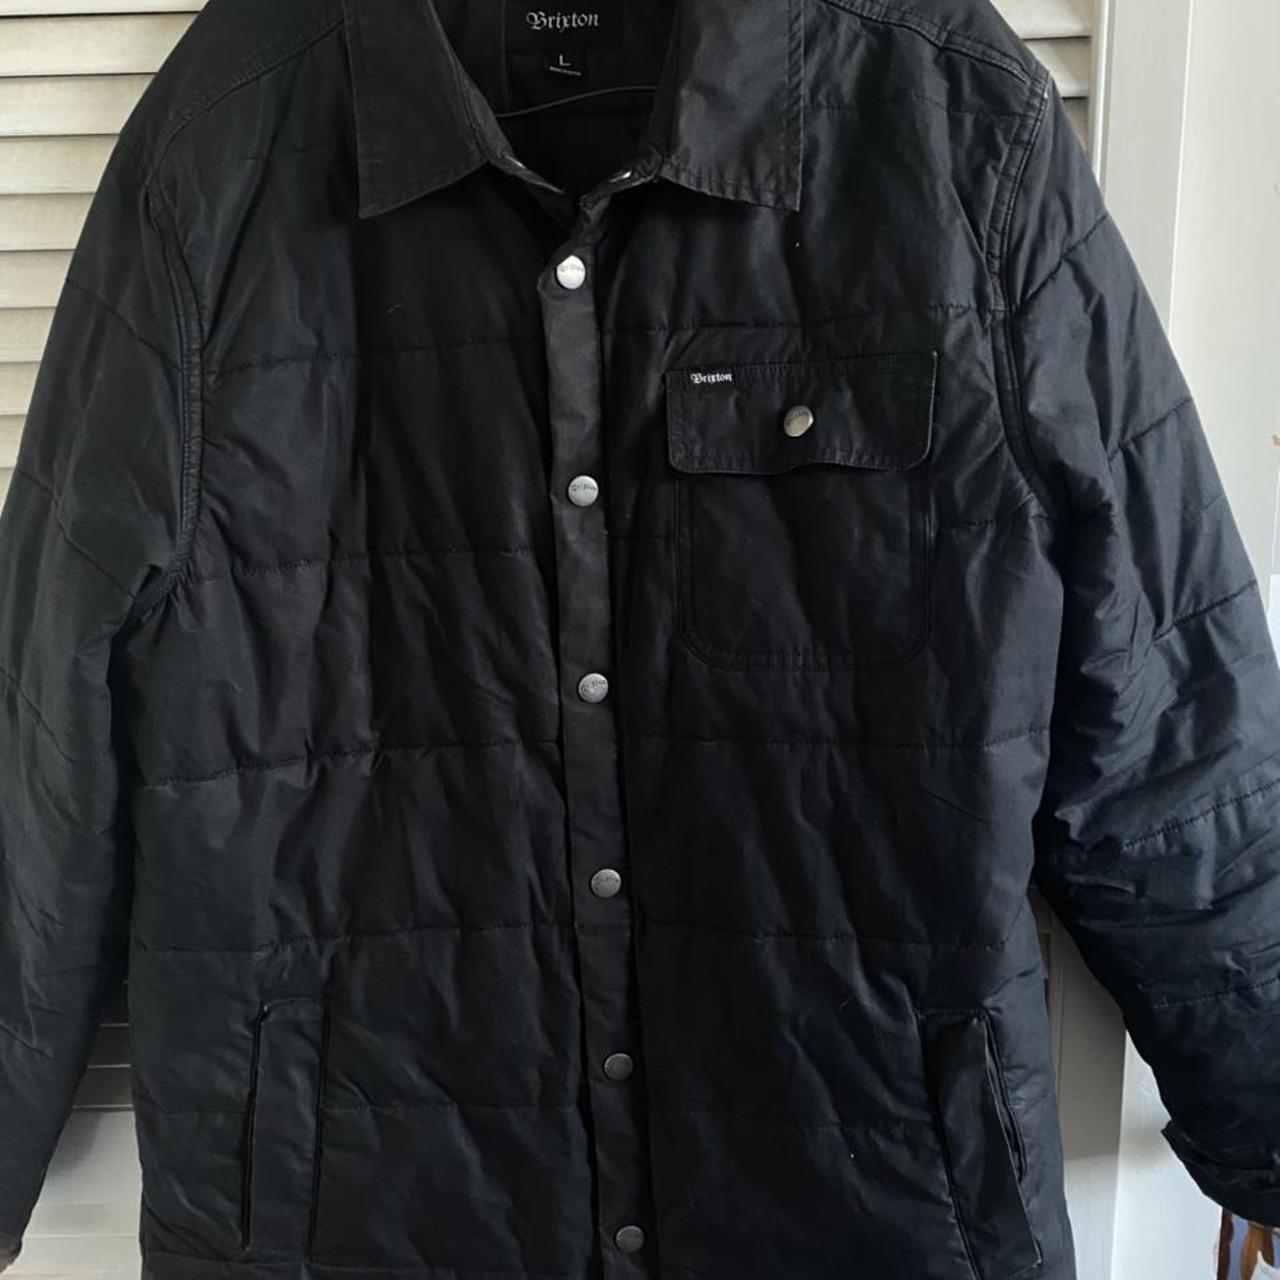 Product Image 1 - Brixton Cass/ Puffer jacket -